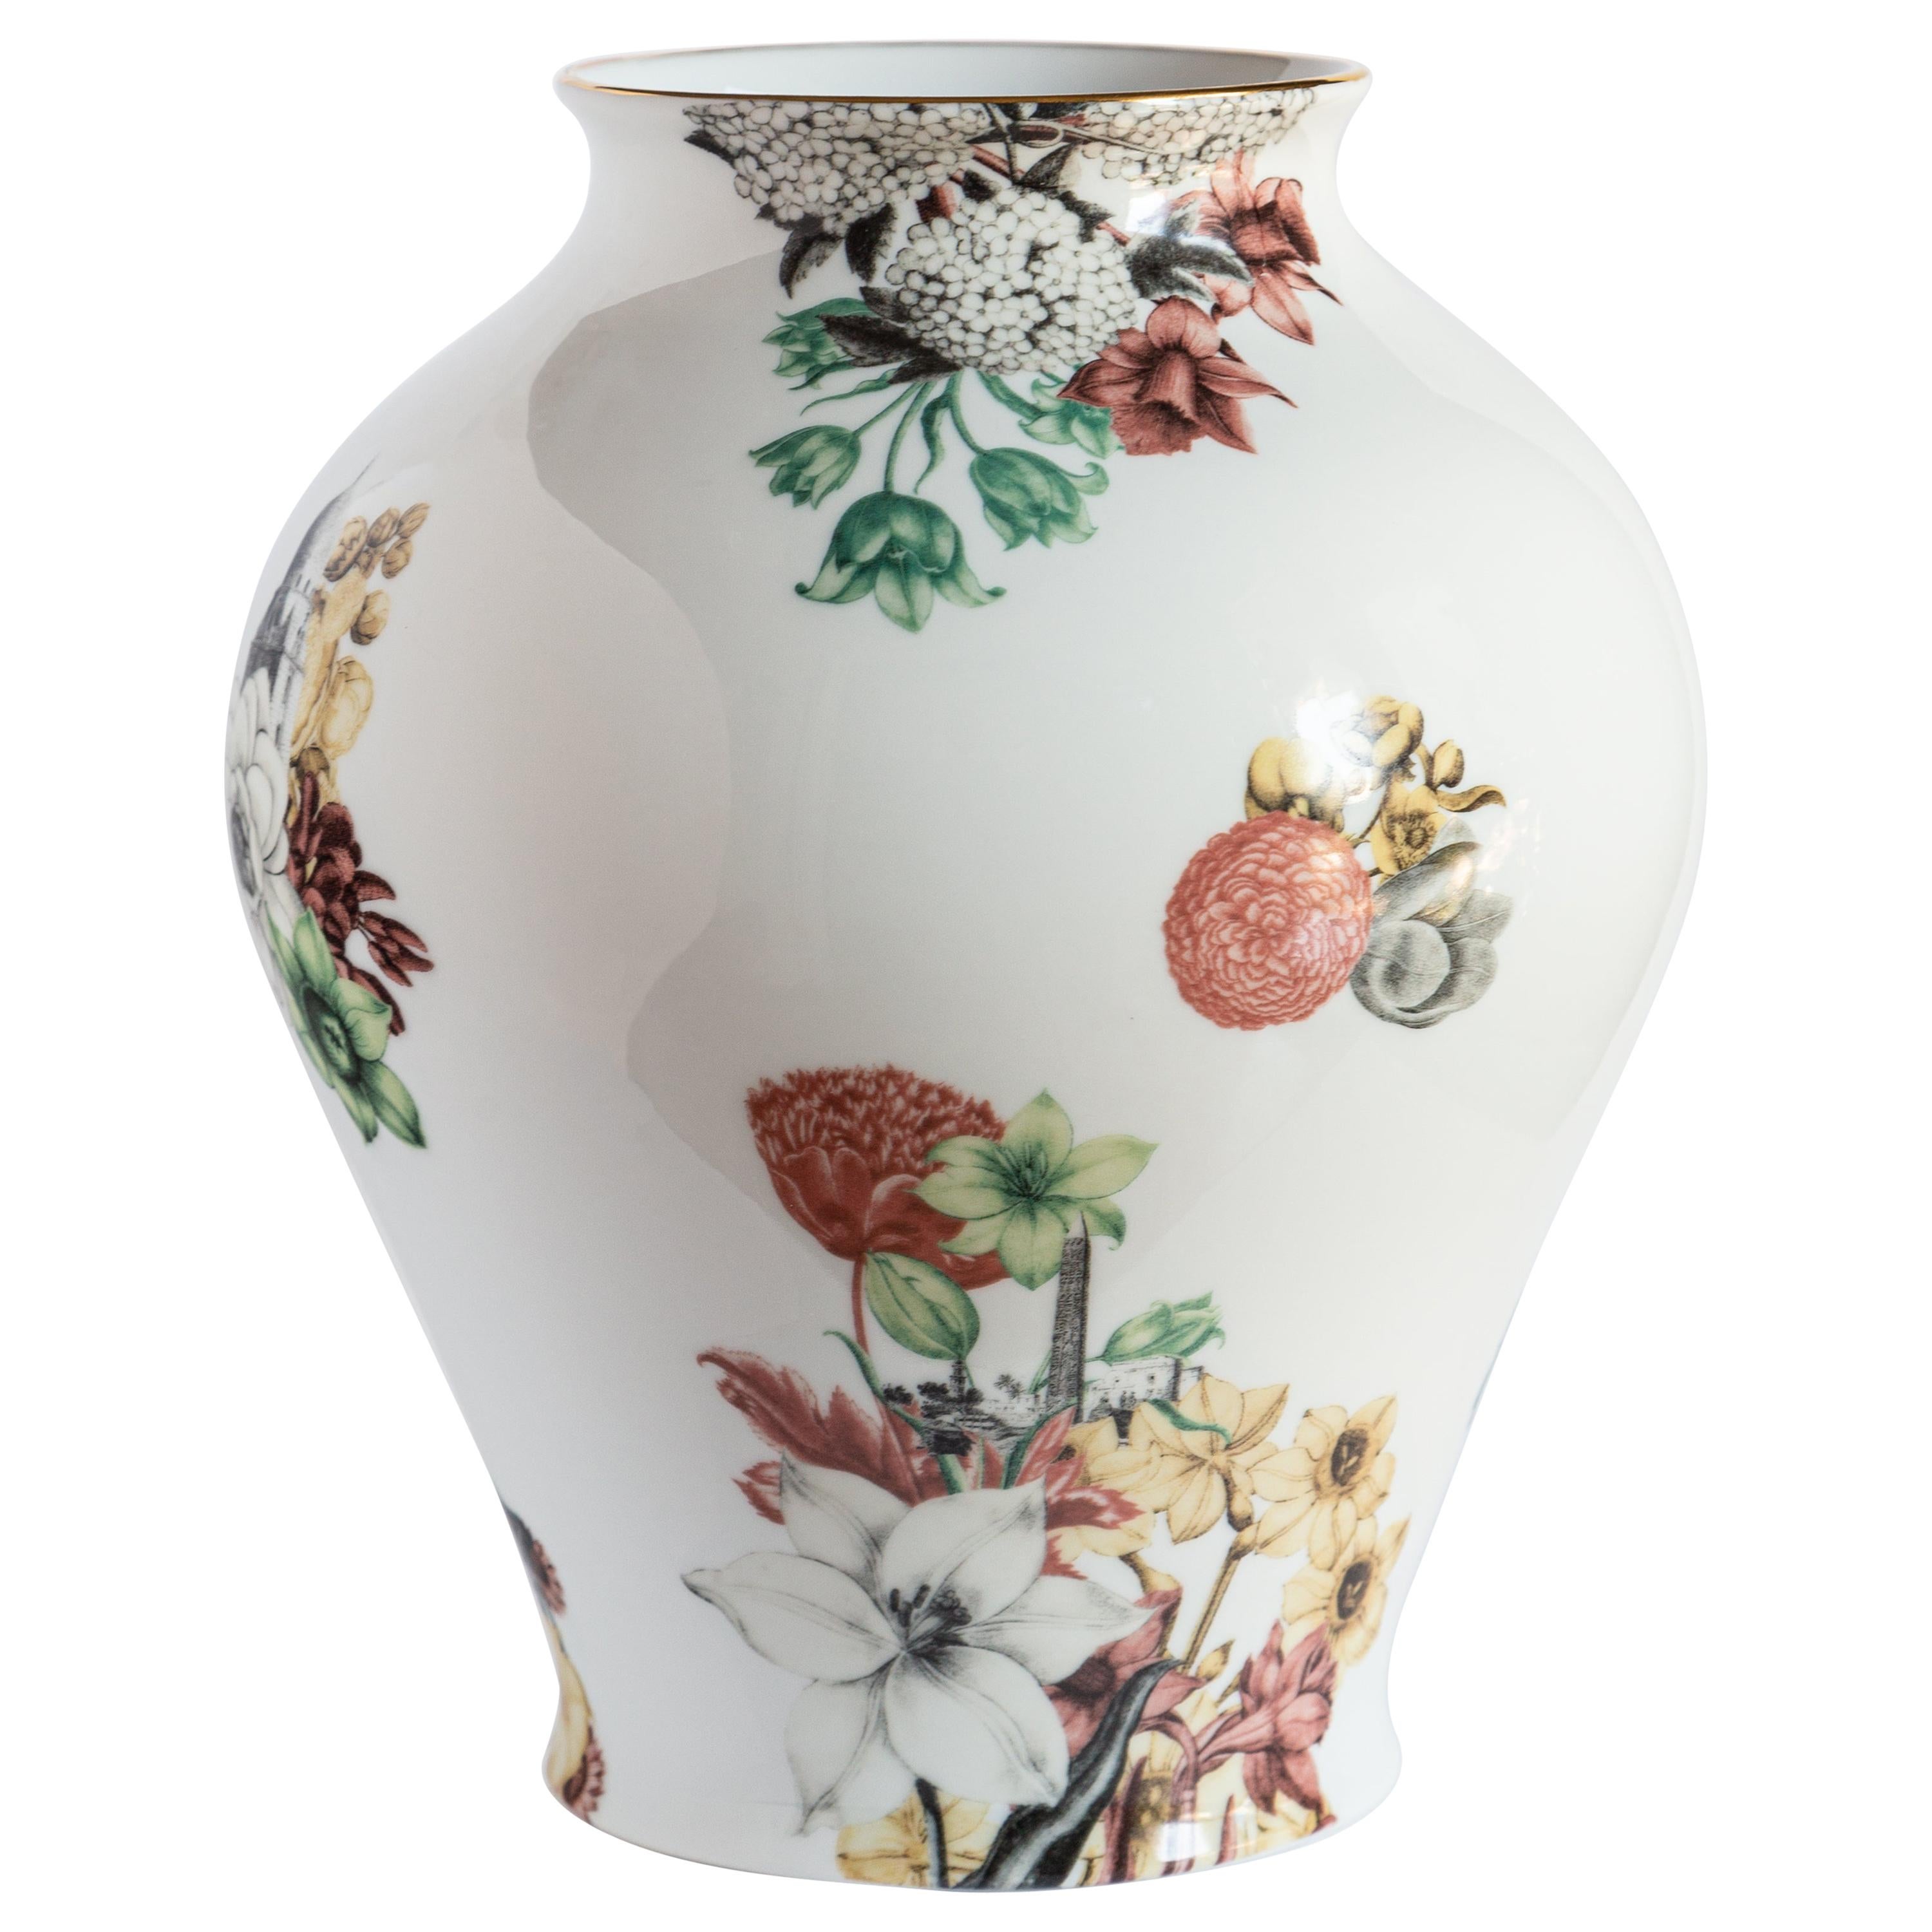 Cairo, Contemporary Porcelain Vase with Decorative Design by Vito Nesta For Sale